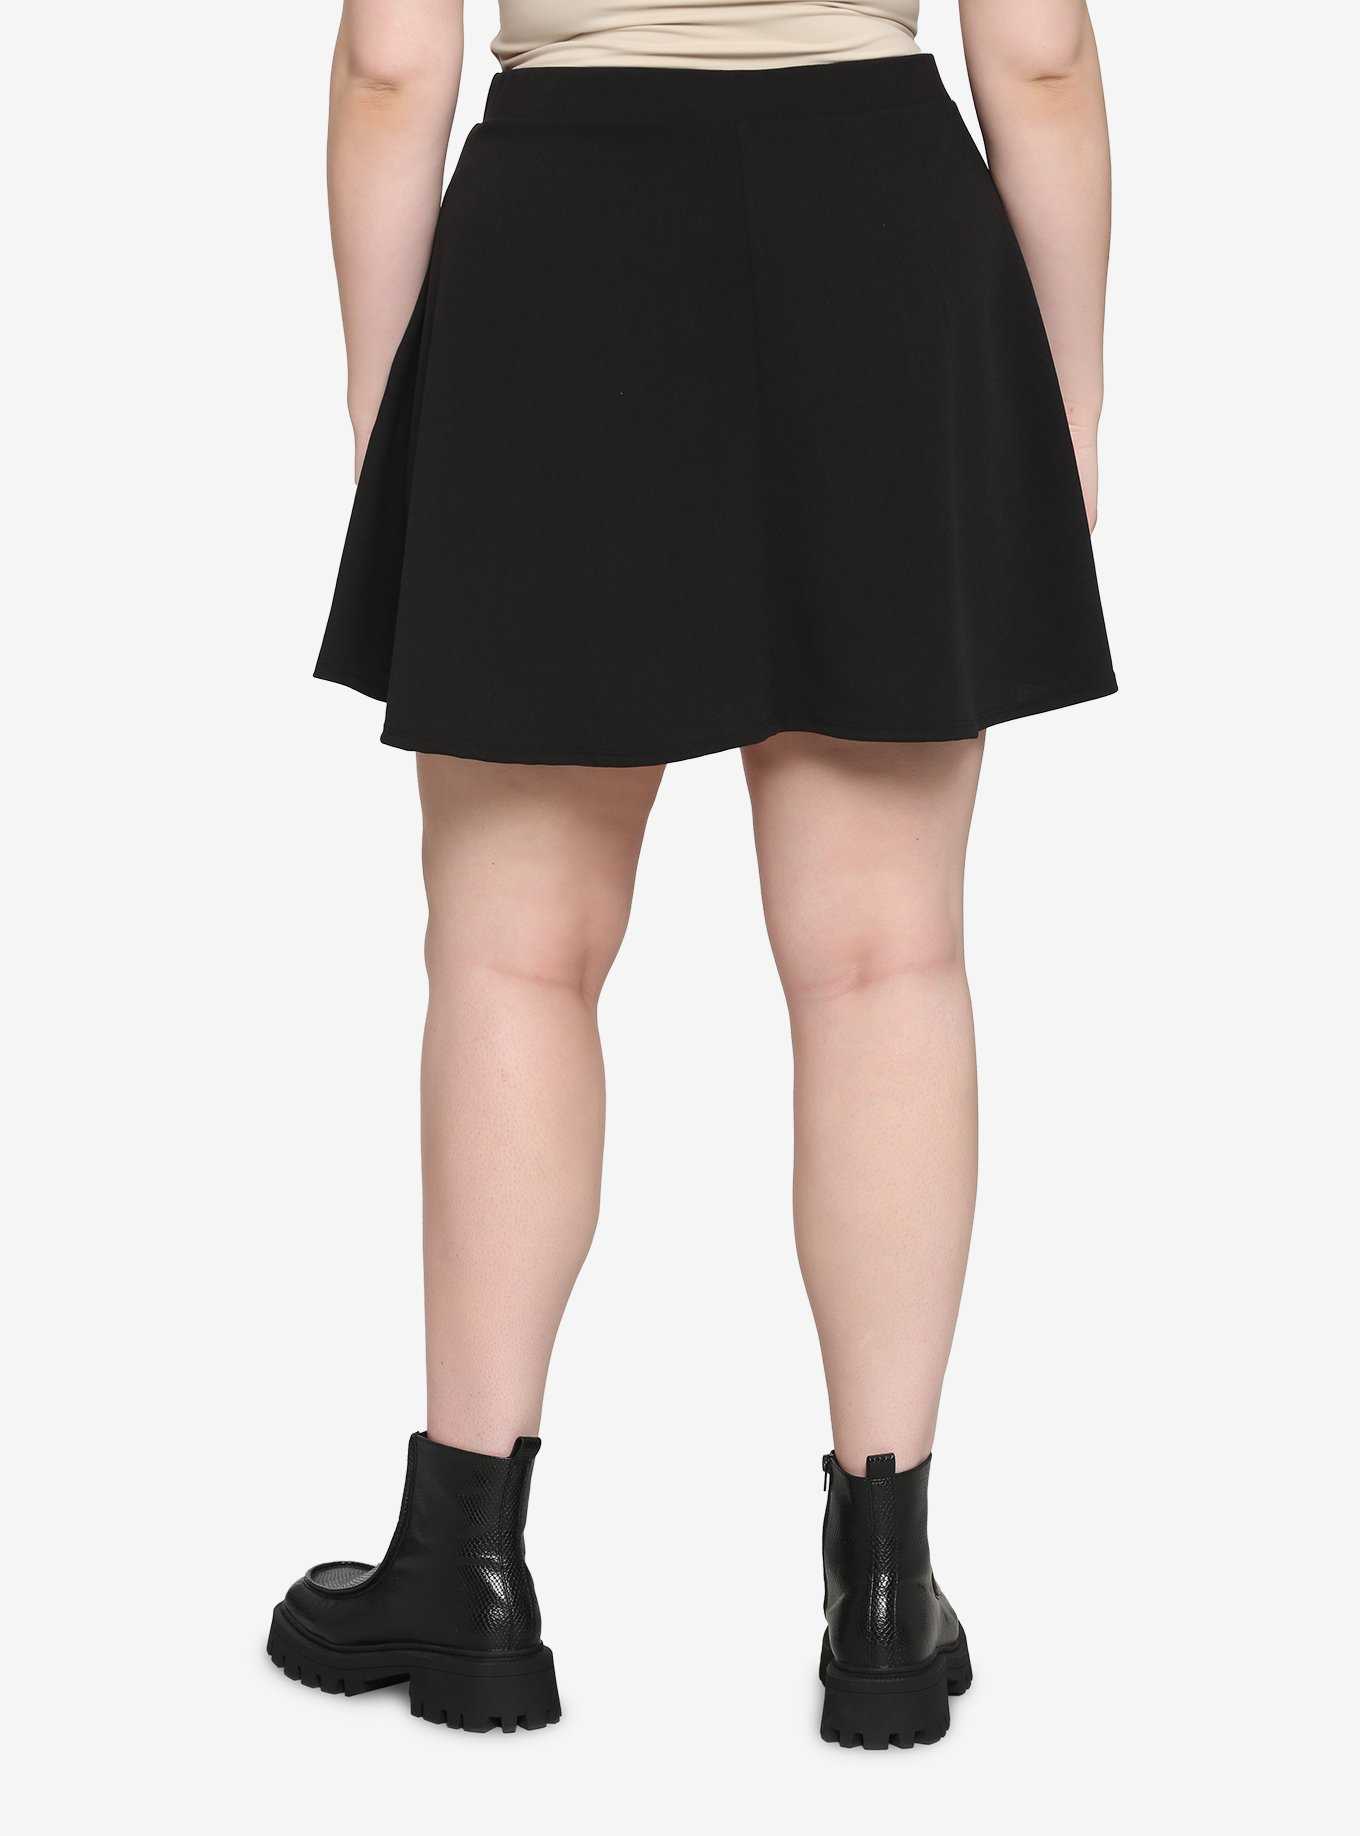 Black Skirt Plus Size, , hi-res